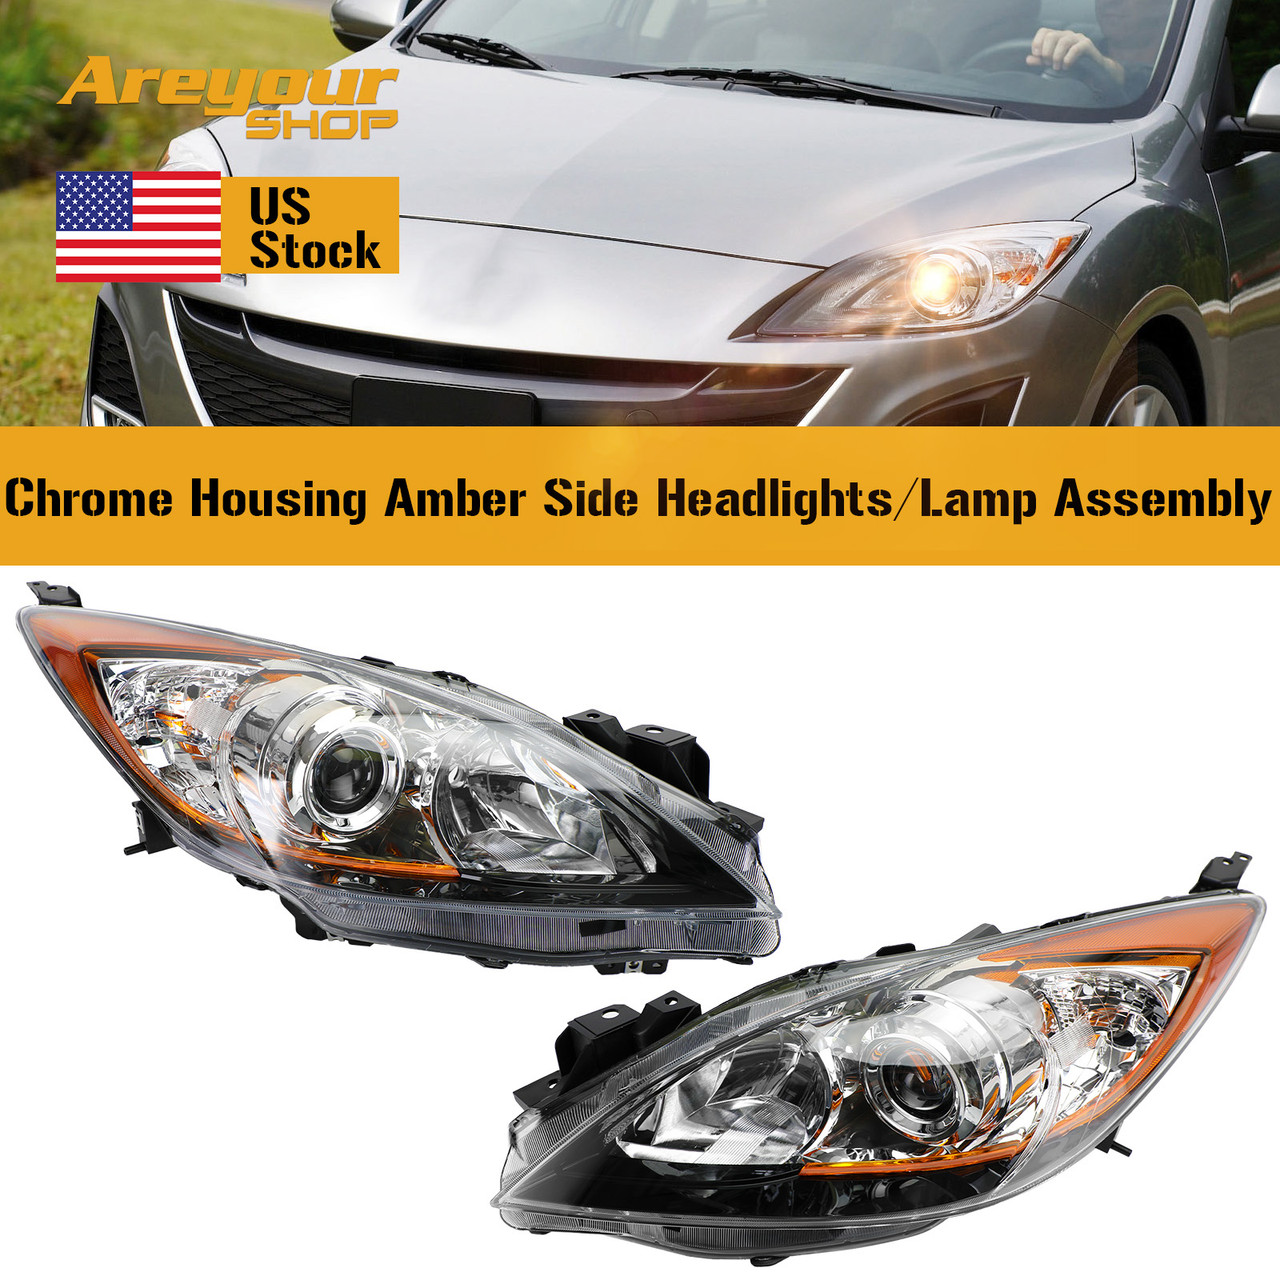 Chrome Housing Amber Side Headlights/Lamp Assembly For Mazda 3 2010-2013